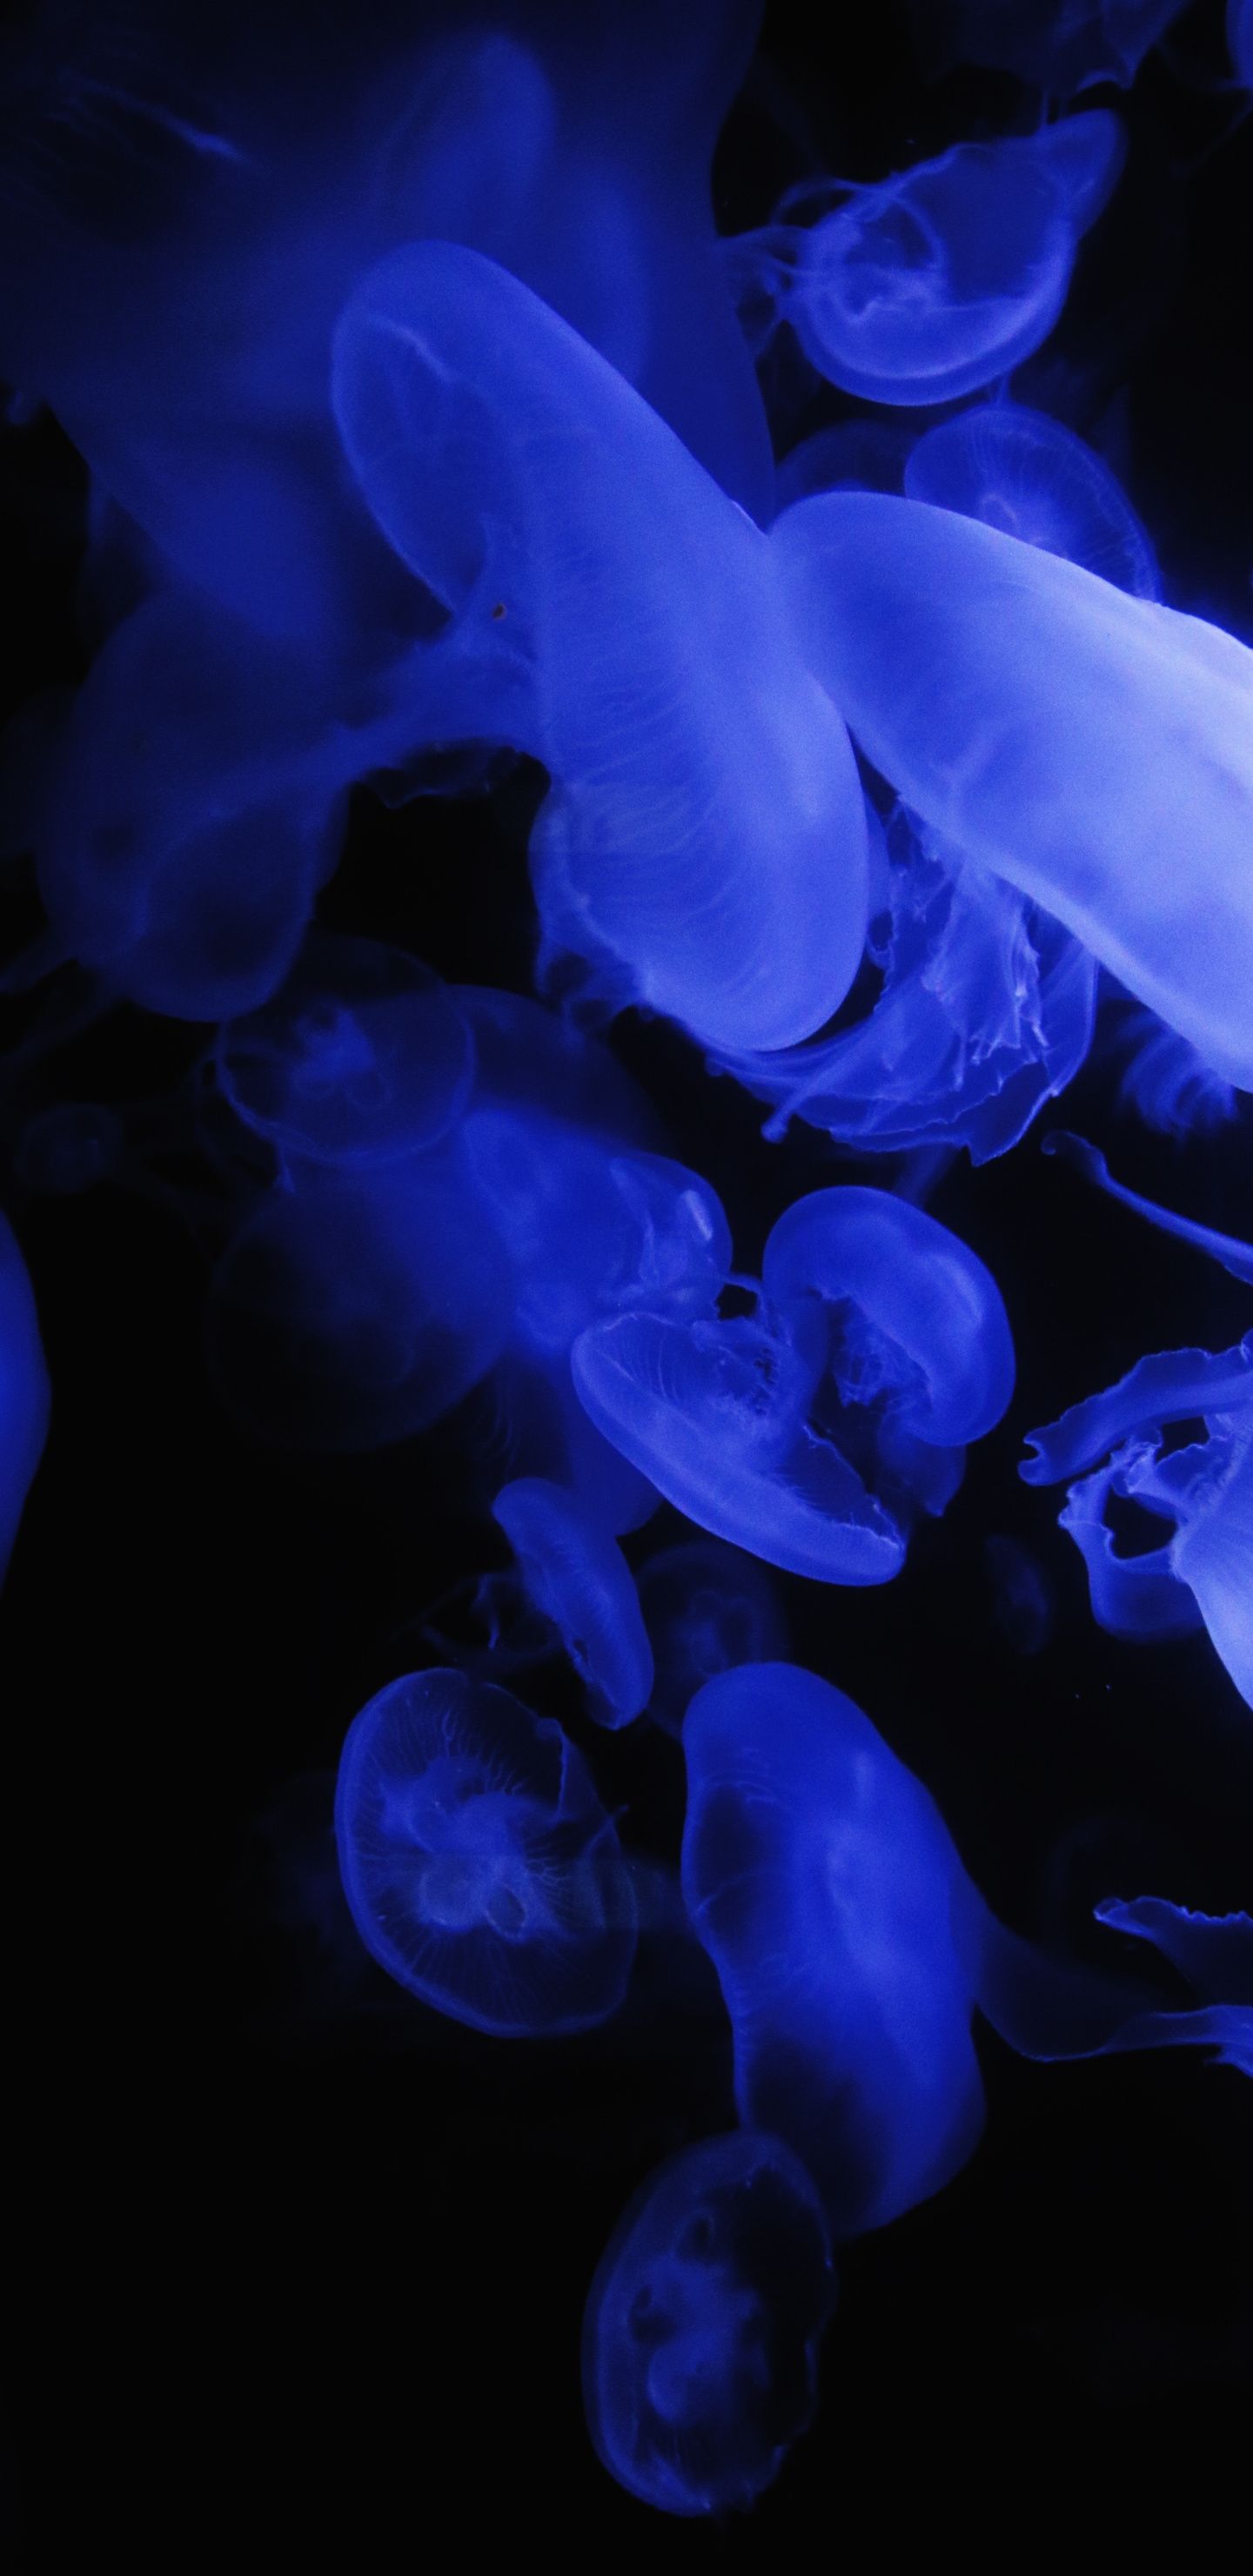 Jellyfish, blue, glow wallpaper. Animal wallpaper, Blue aesthetic pastel, Beautiful wallpaper image